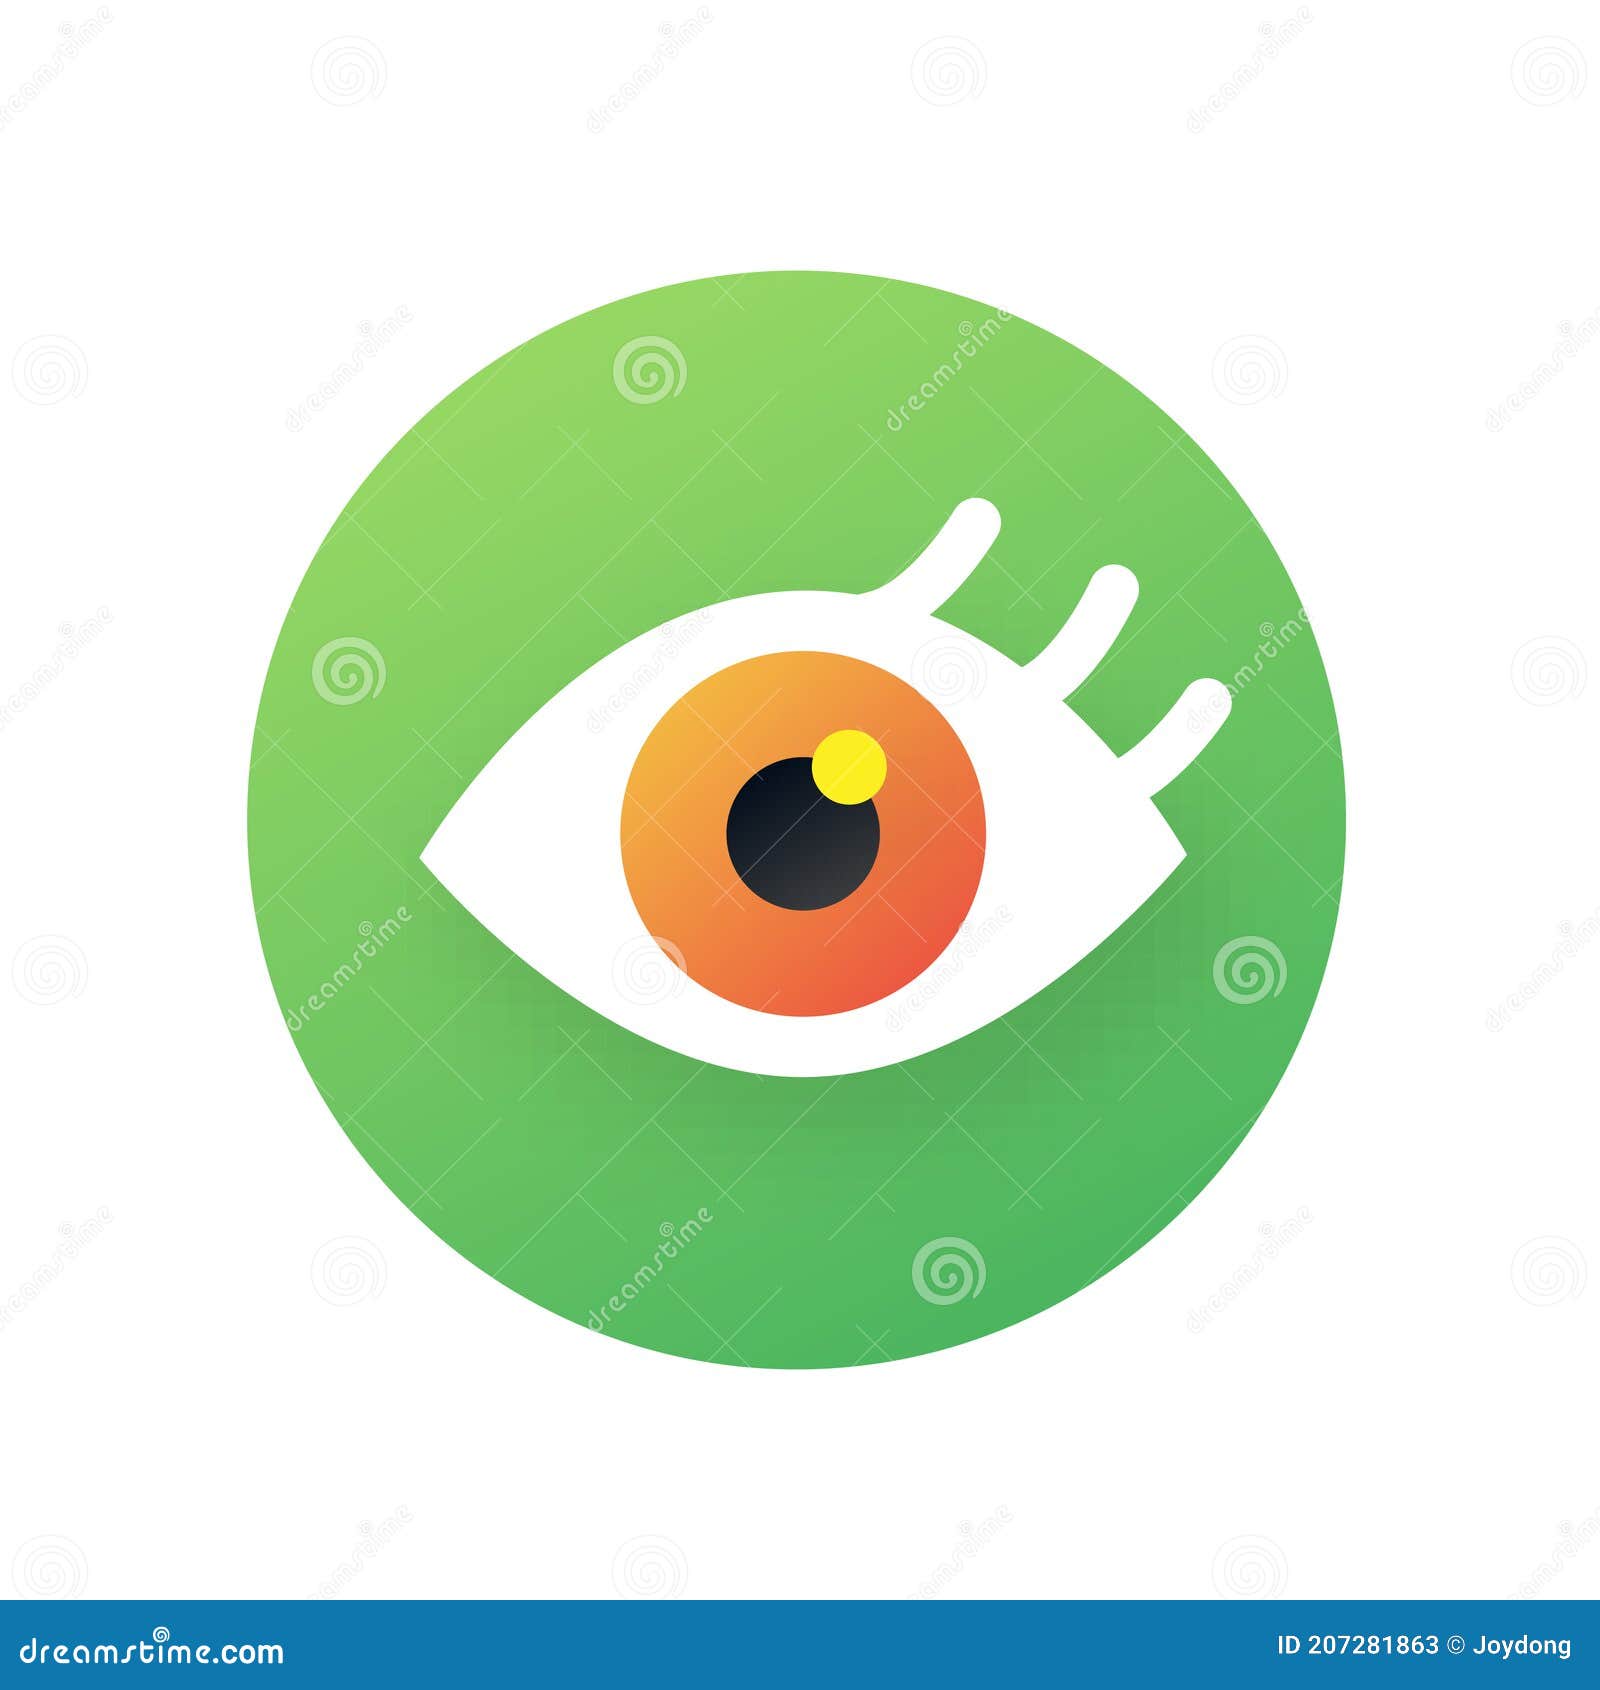 green  browse eye chart icon